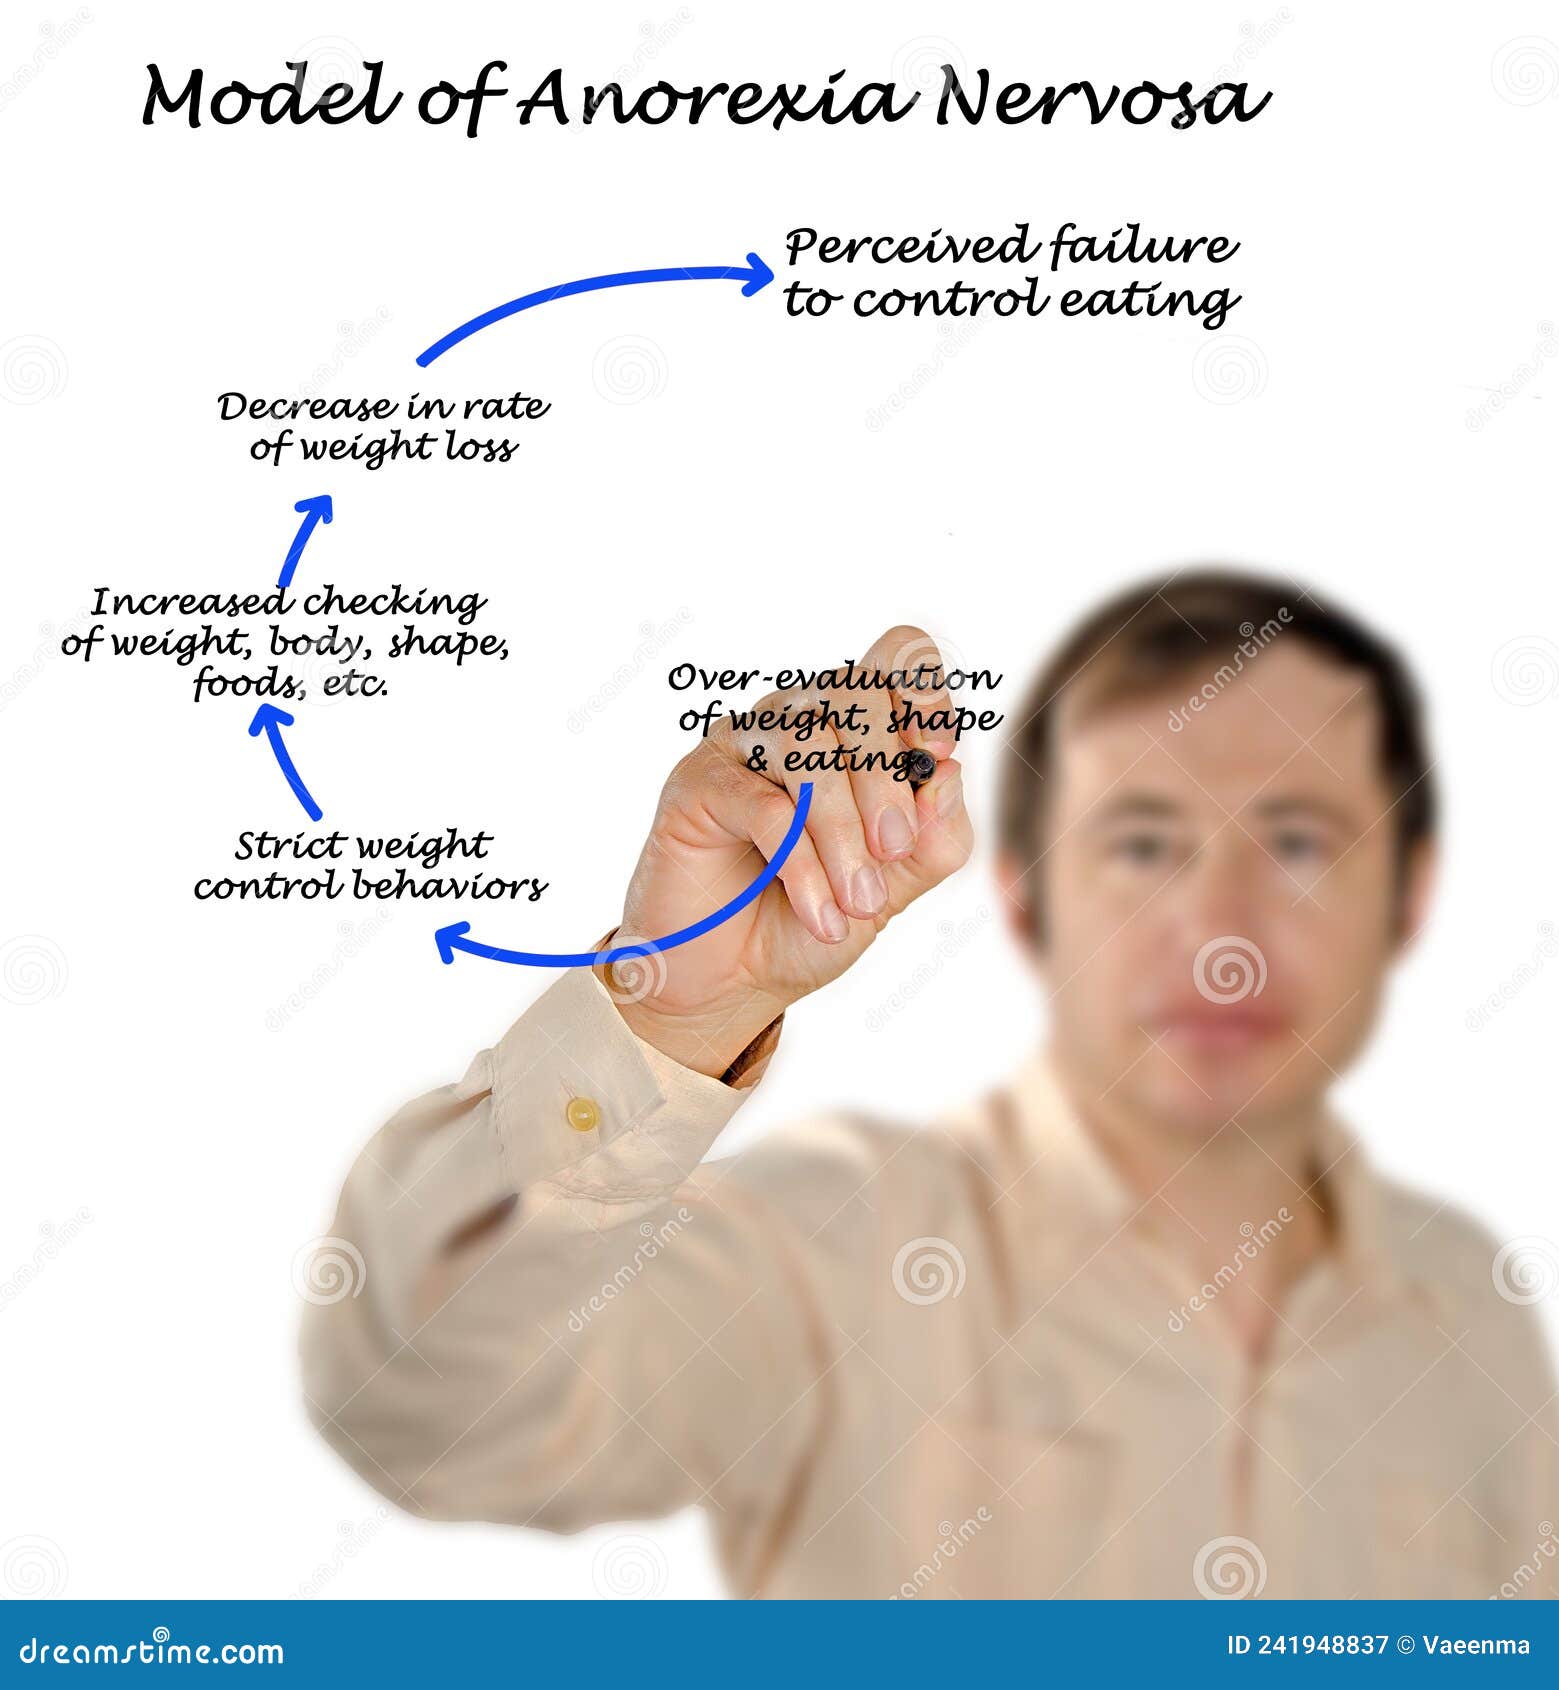 development of anorexia nervosa